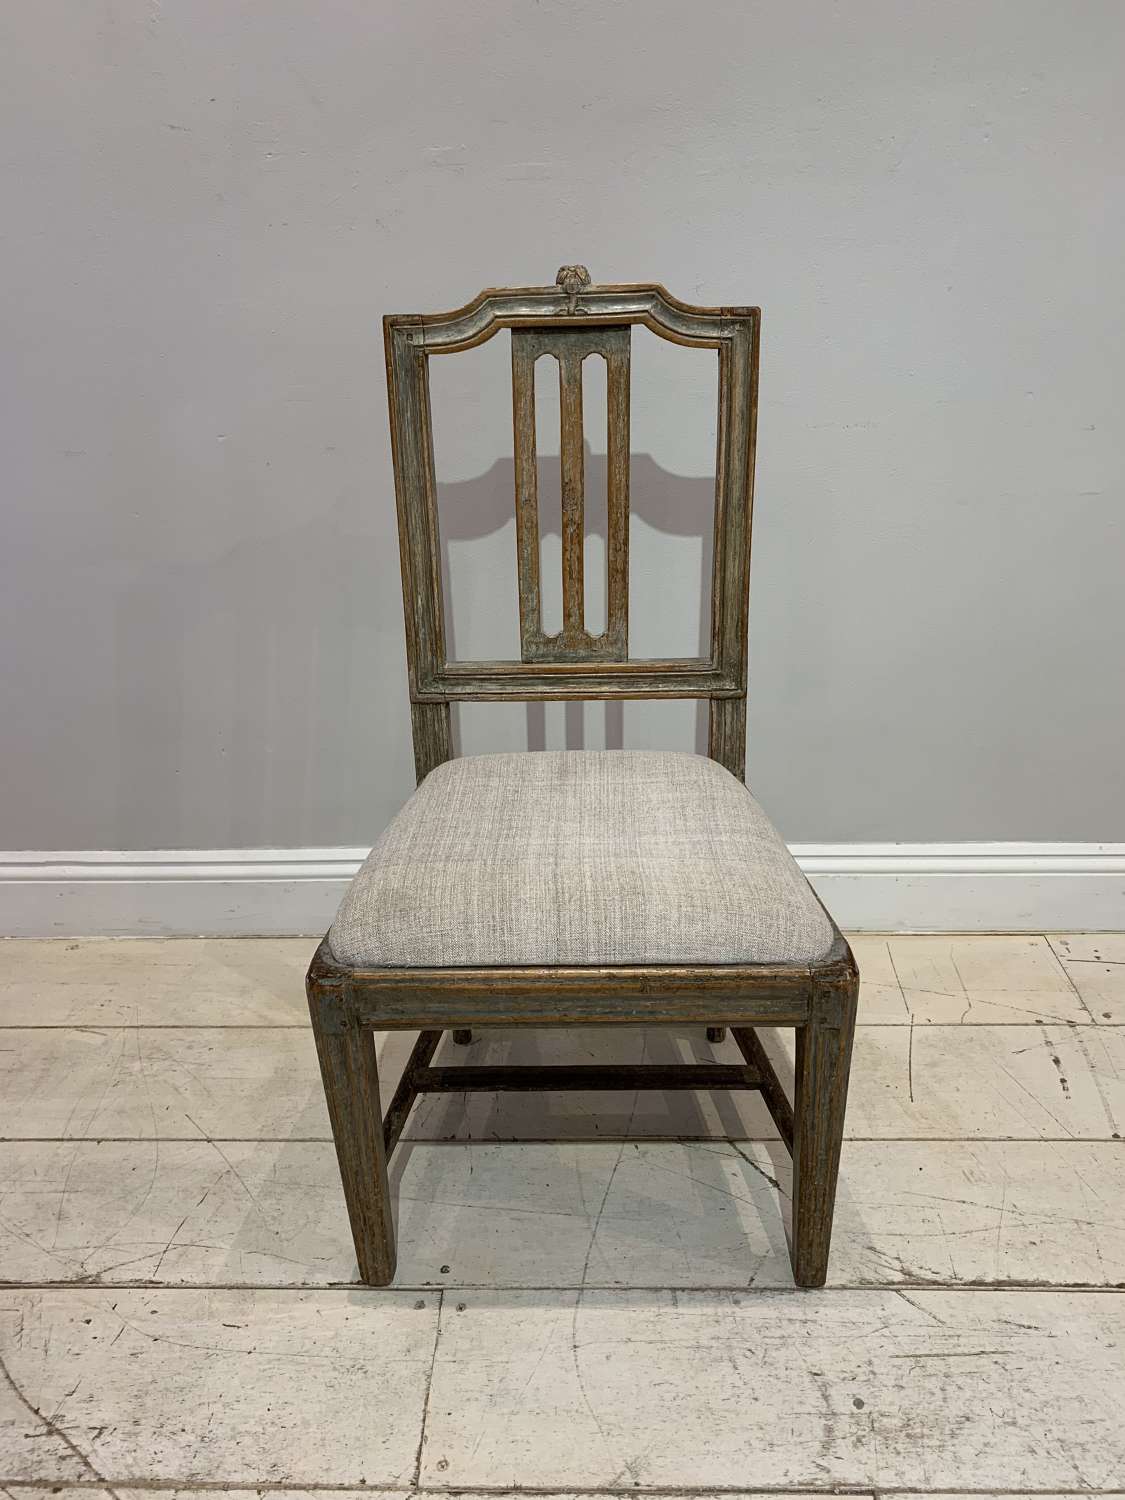 Circa 1800s painted Gustavian Swedish chair